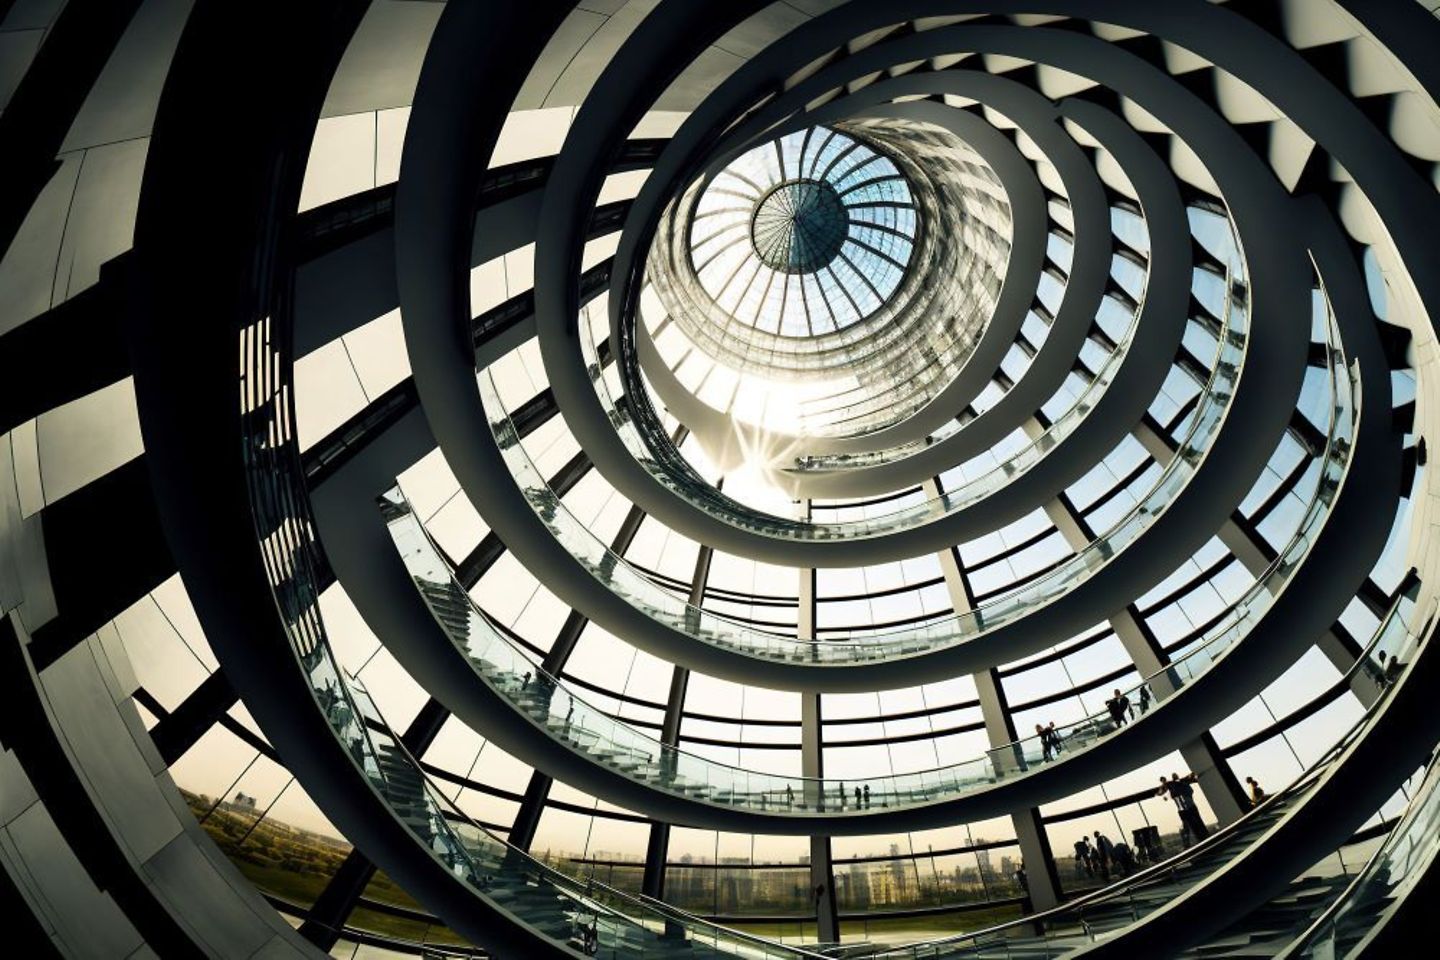 Modern spiral dome inside glass metal building spiral stairway.